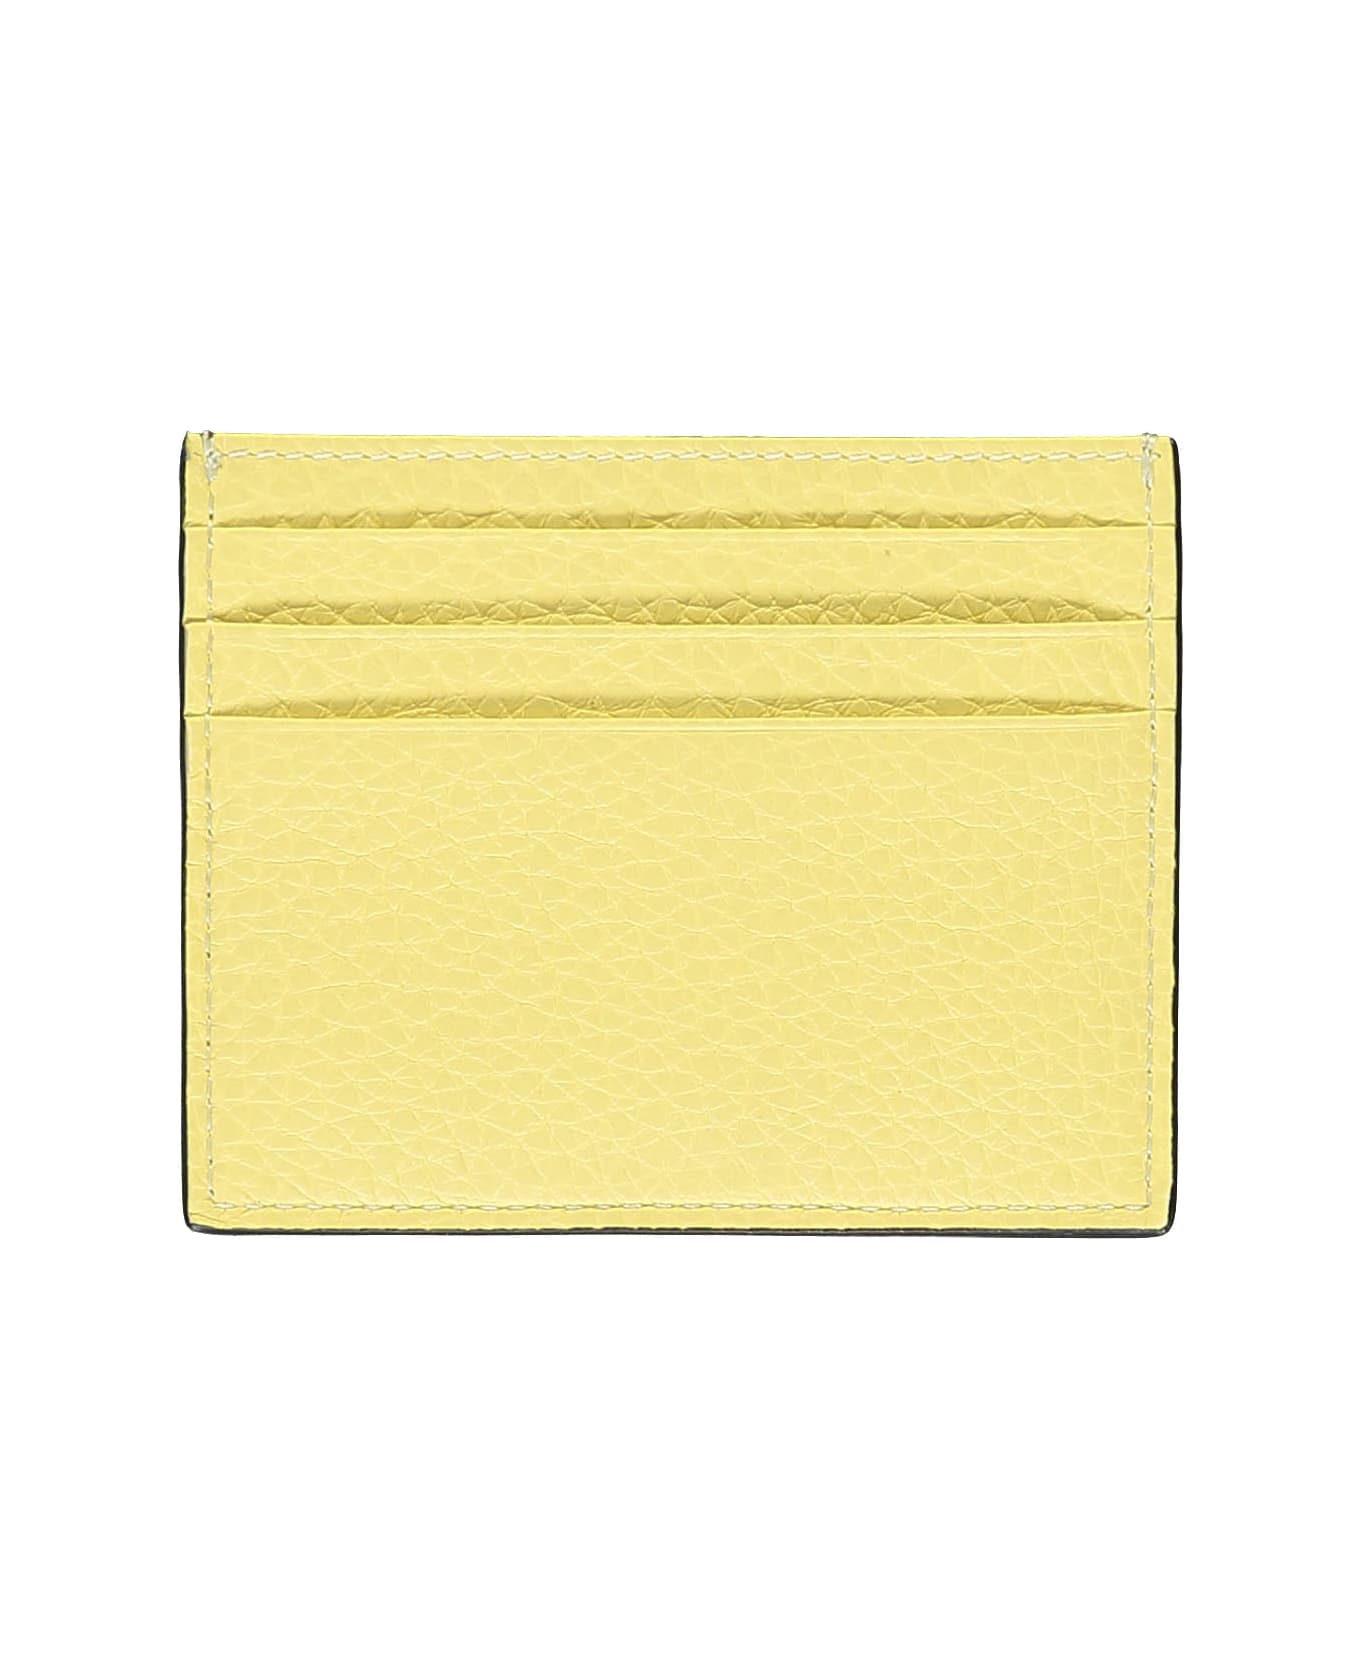 Fendi Leather Card Holder - brown